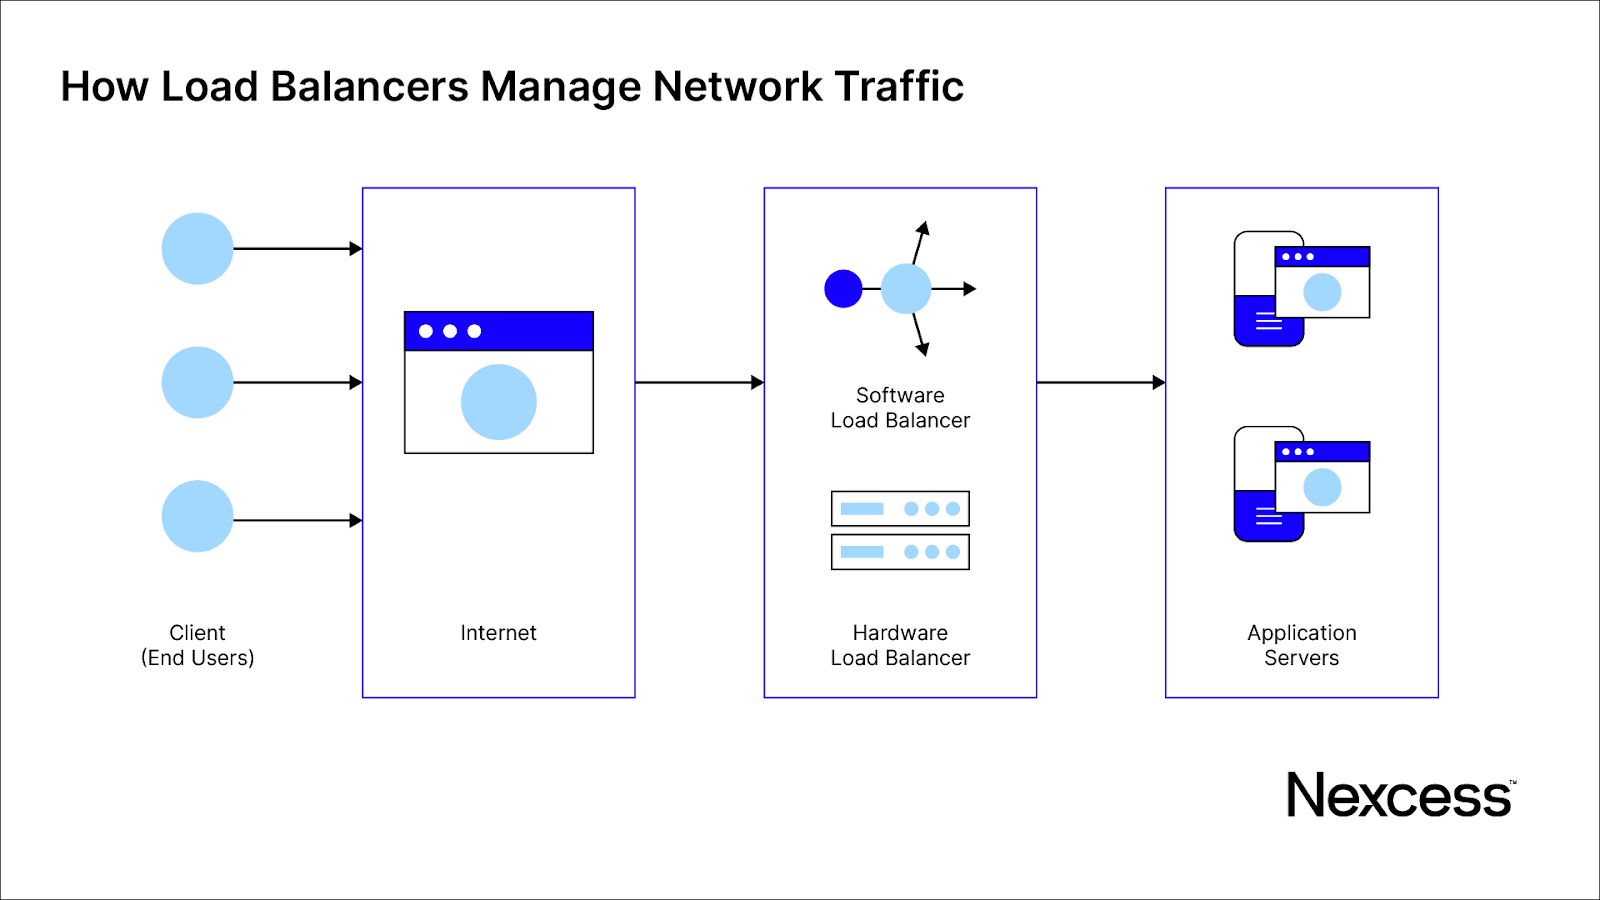 How load balancers manage network traffic.